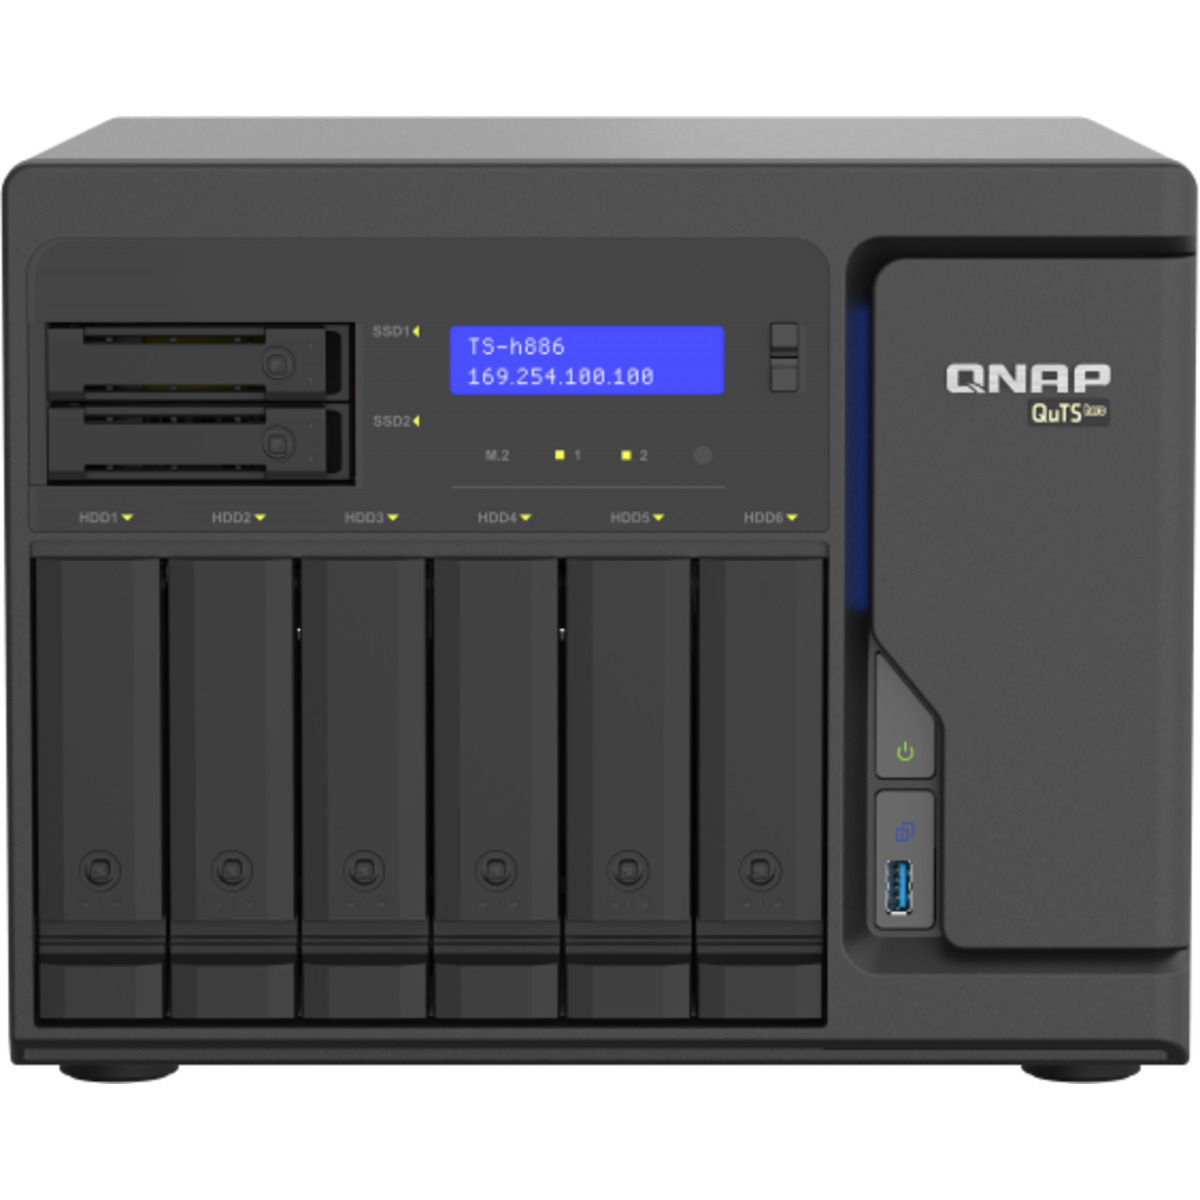 buy $2112 QNAP TS-h886 QuTS hero NAS DISKLESS Desktop NAS - Network Attached Storage Device TS-h886 QuTS hero NAS